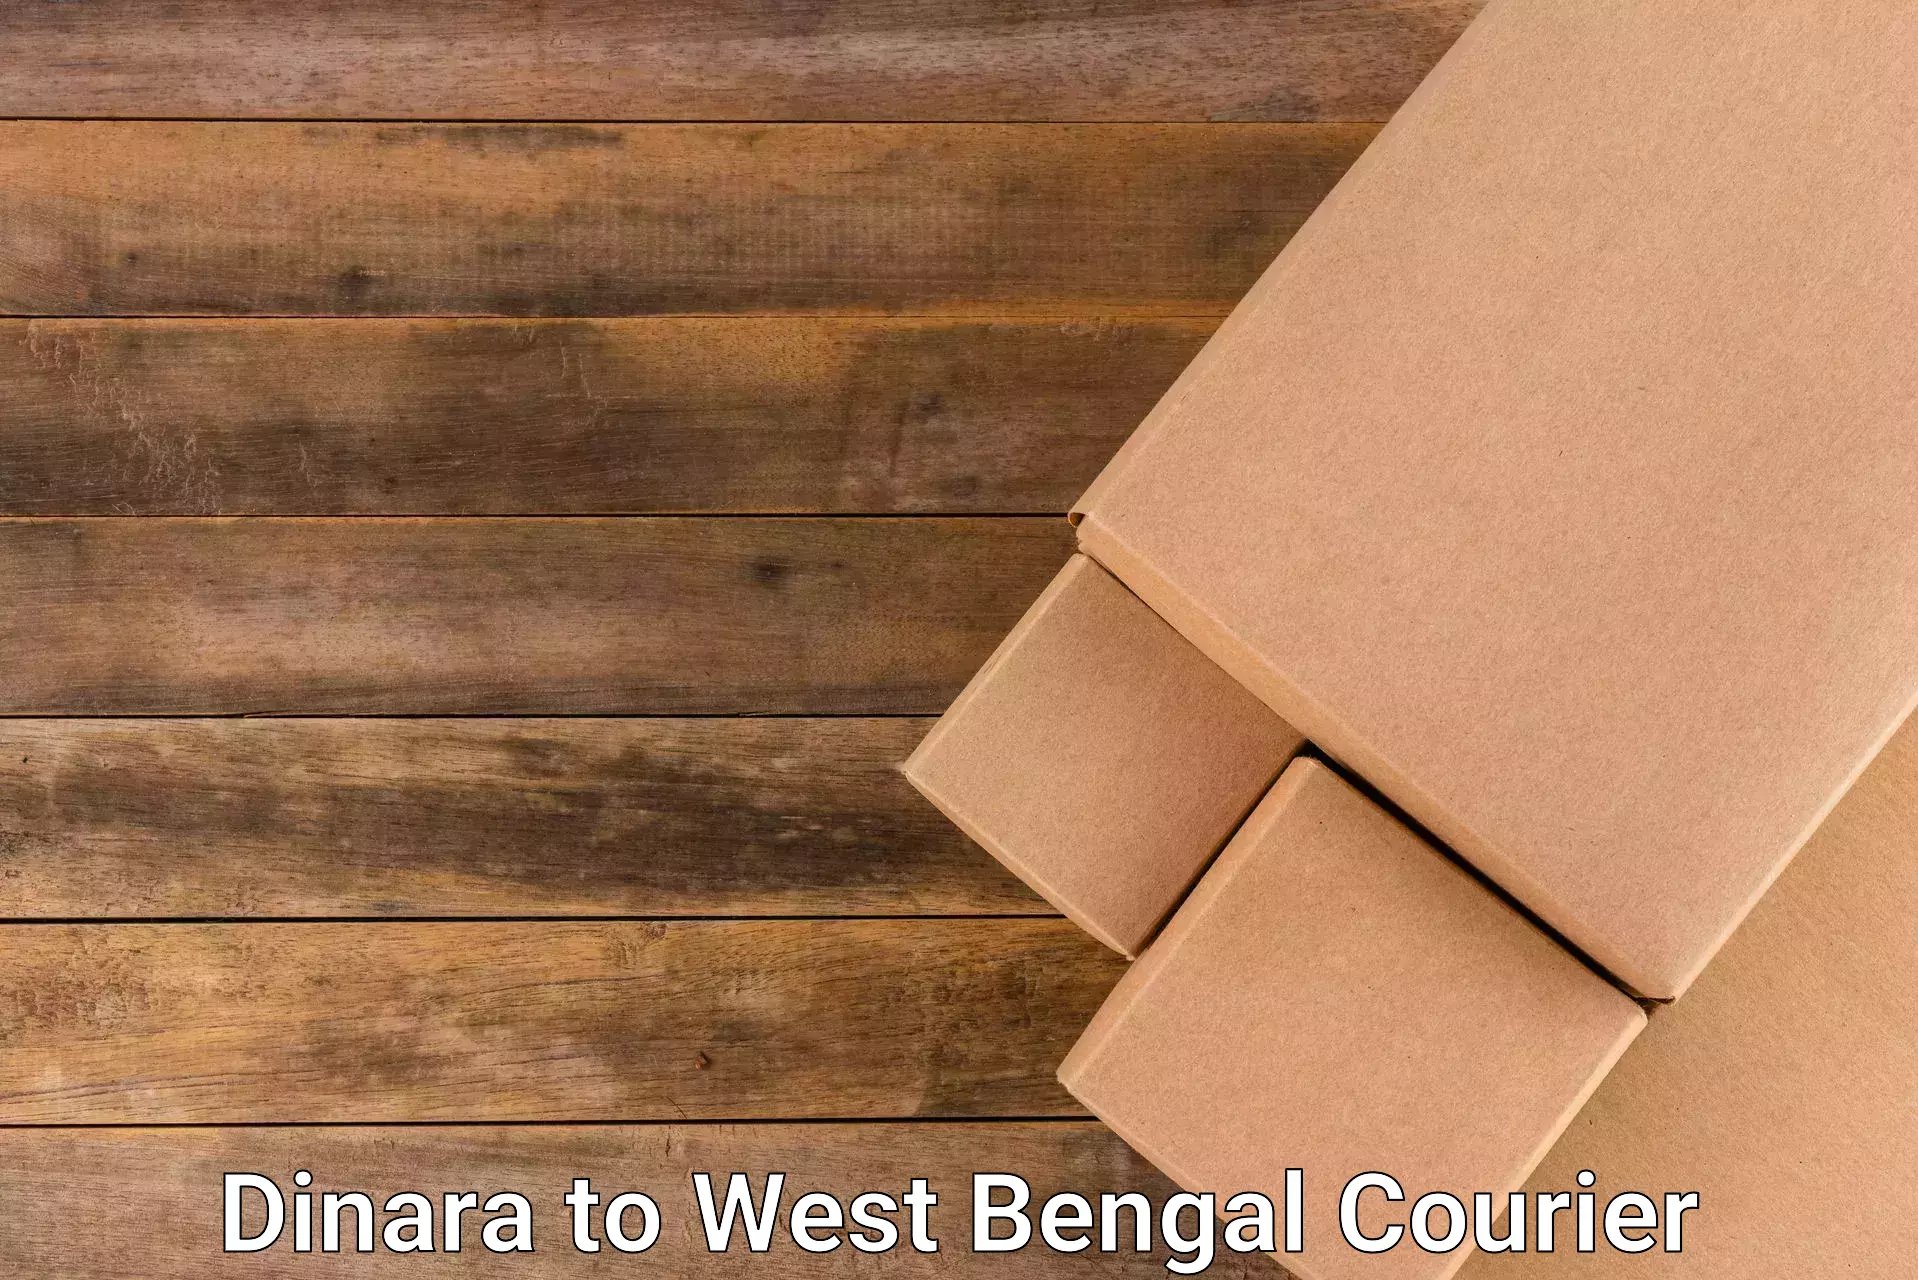 Courier service partnerships Dinara to Kolkata Port